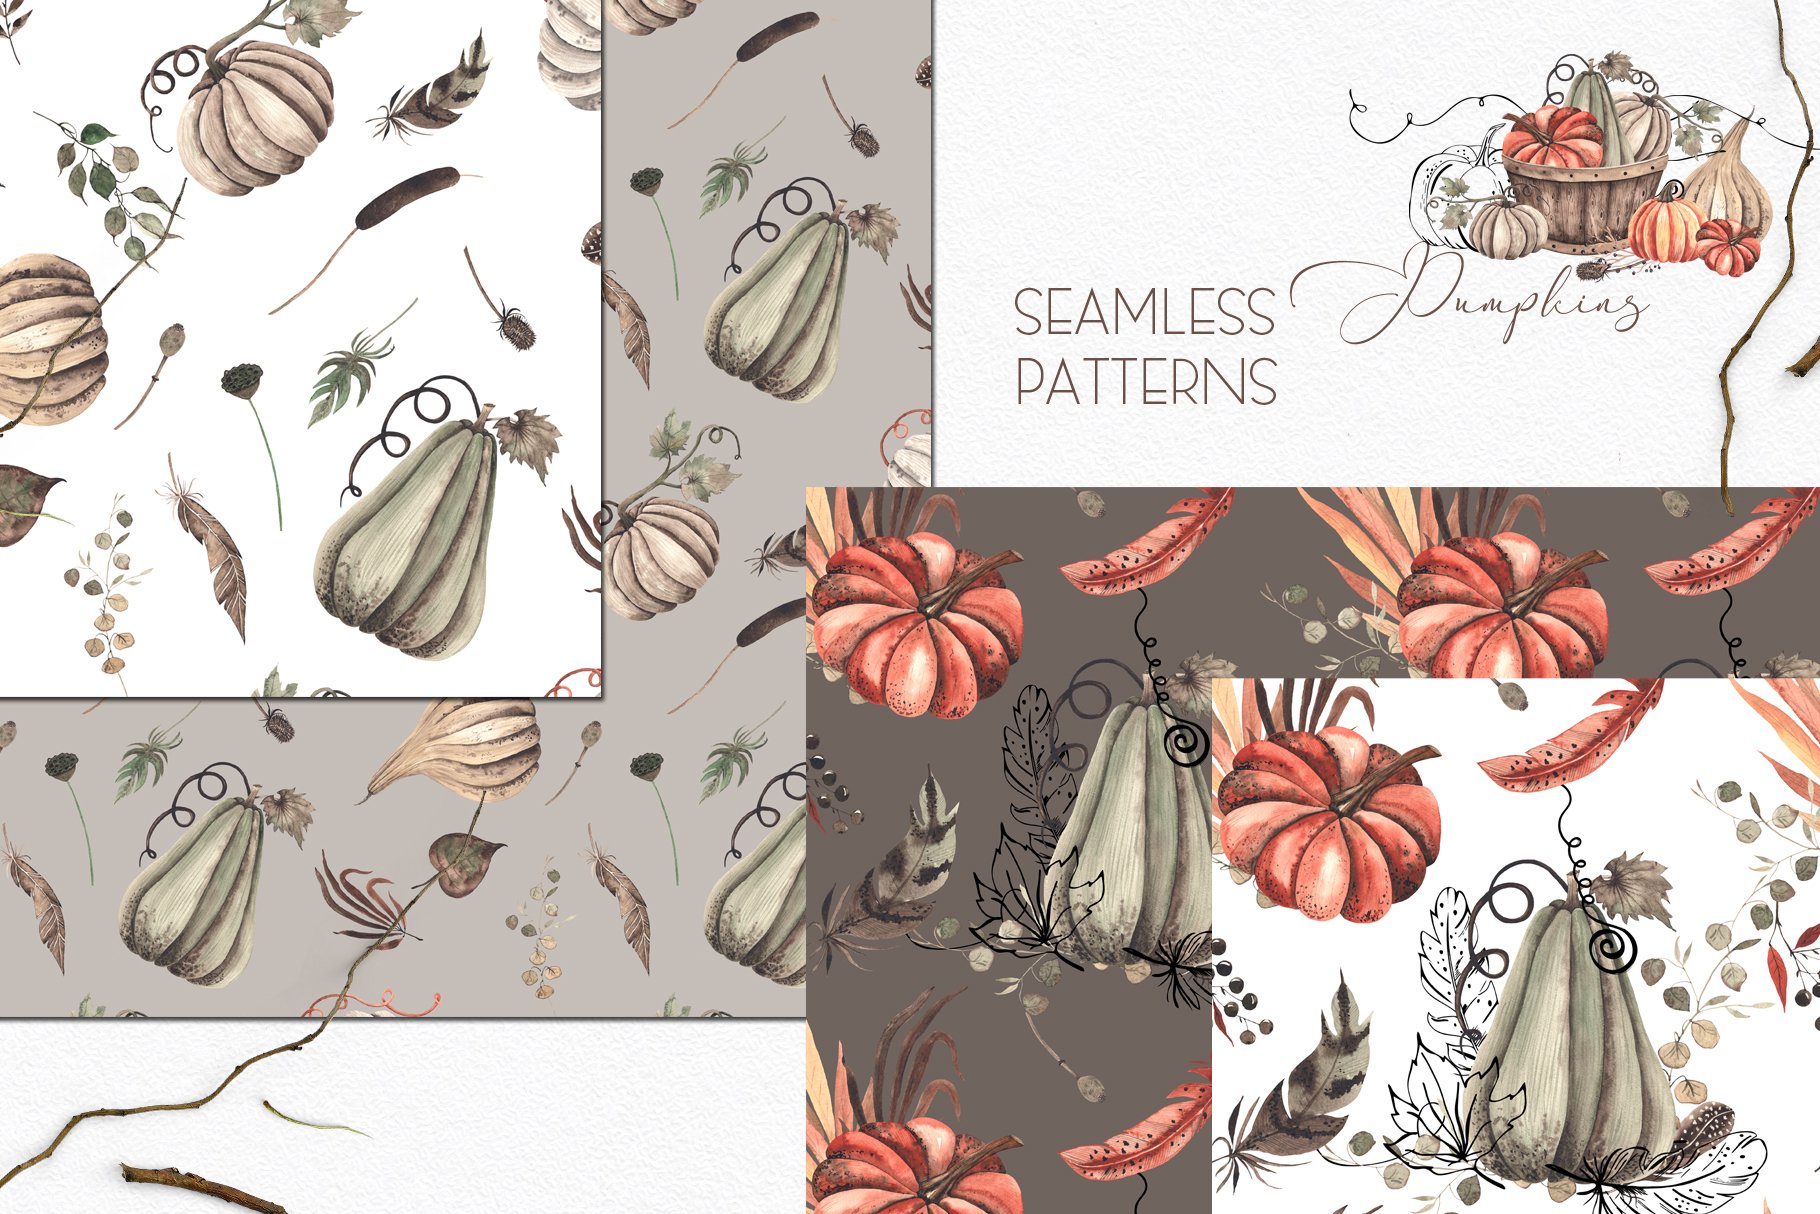 Some autumn patterns.